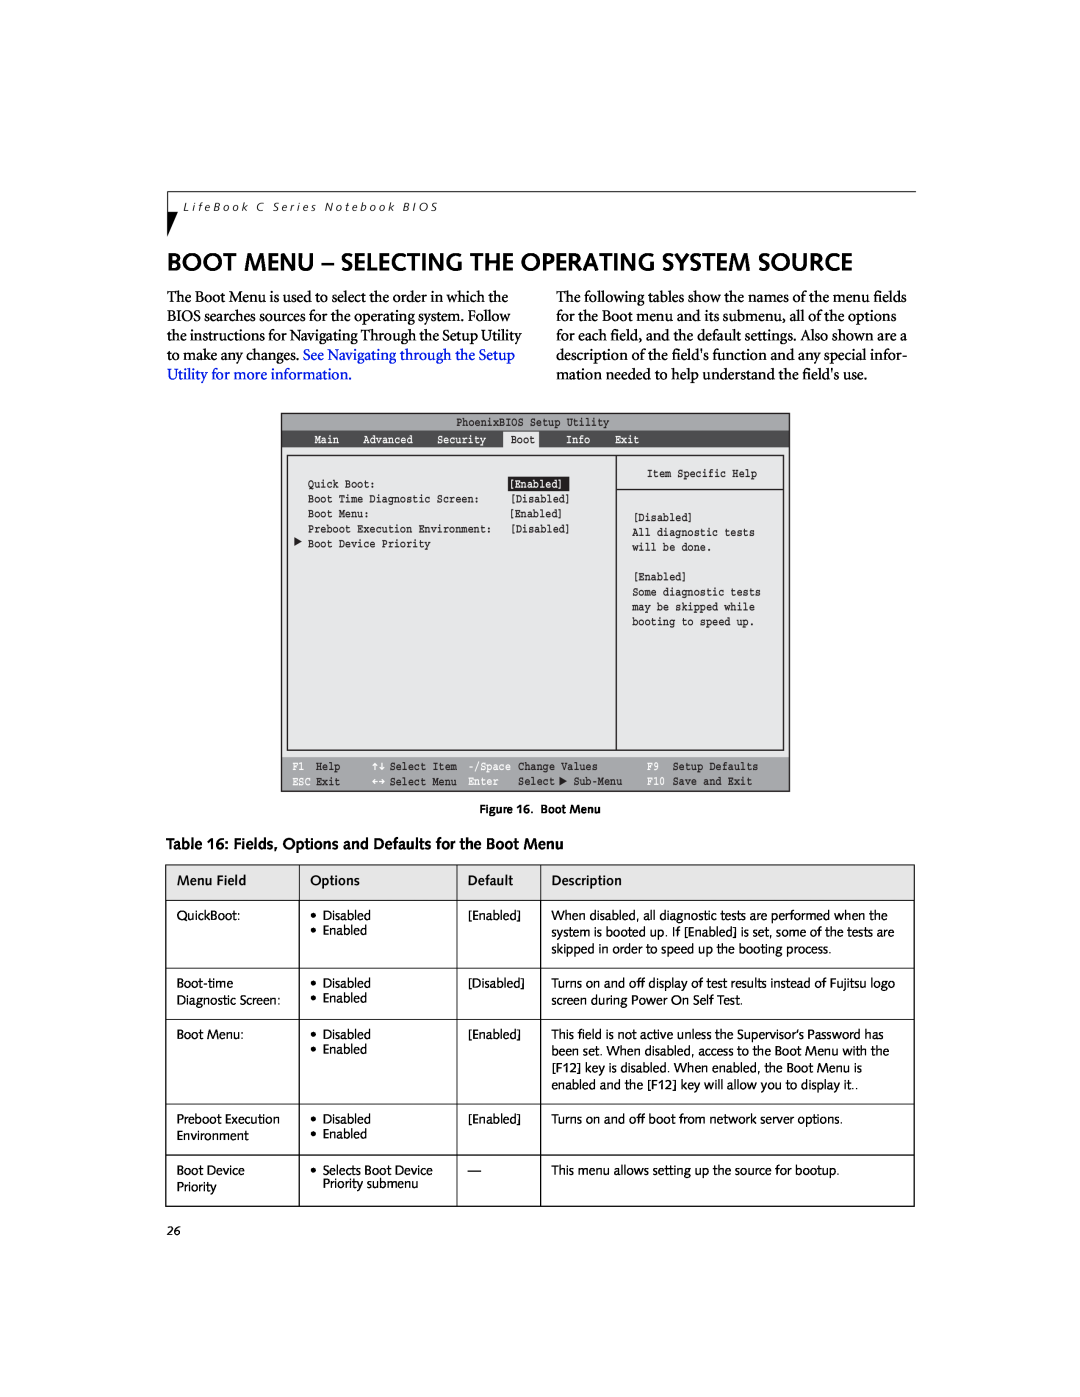 Fujitsu Siemens Computers C2310 manual Boot Menu - Selecting The Operating System Source 